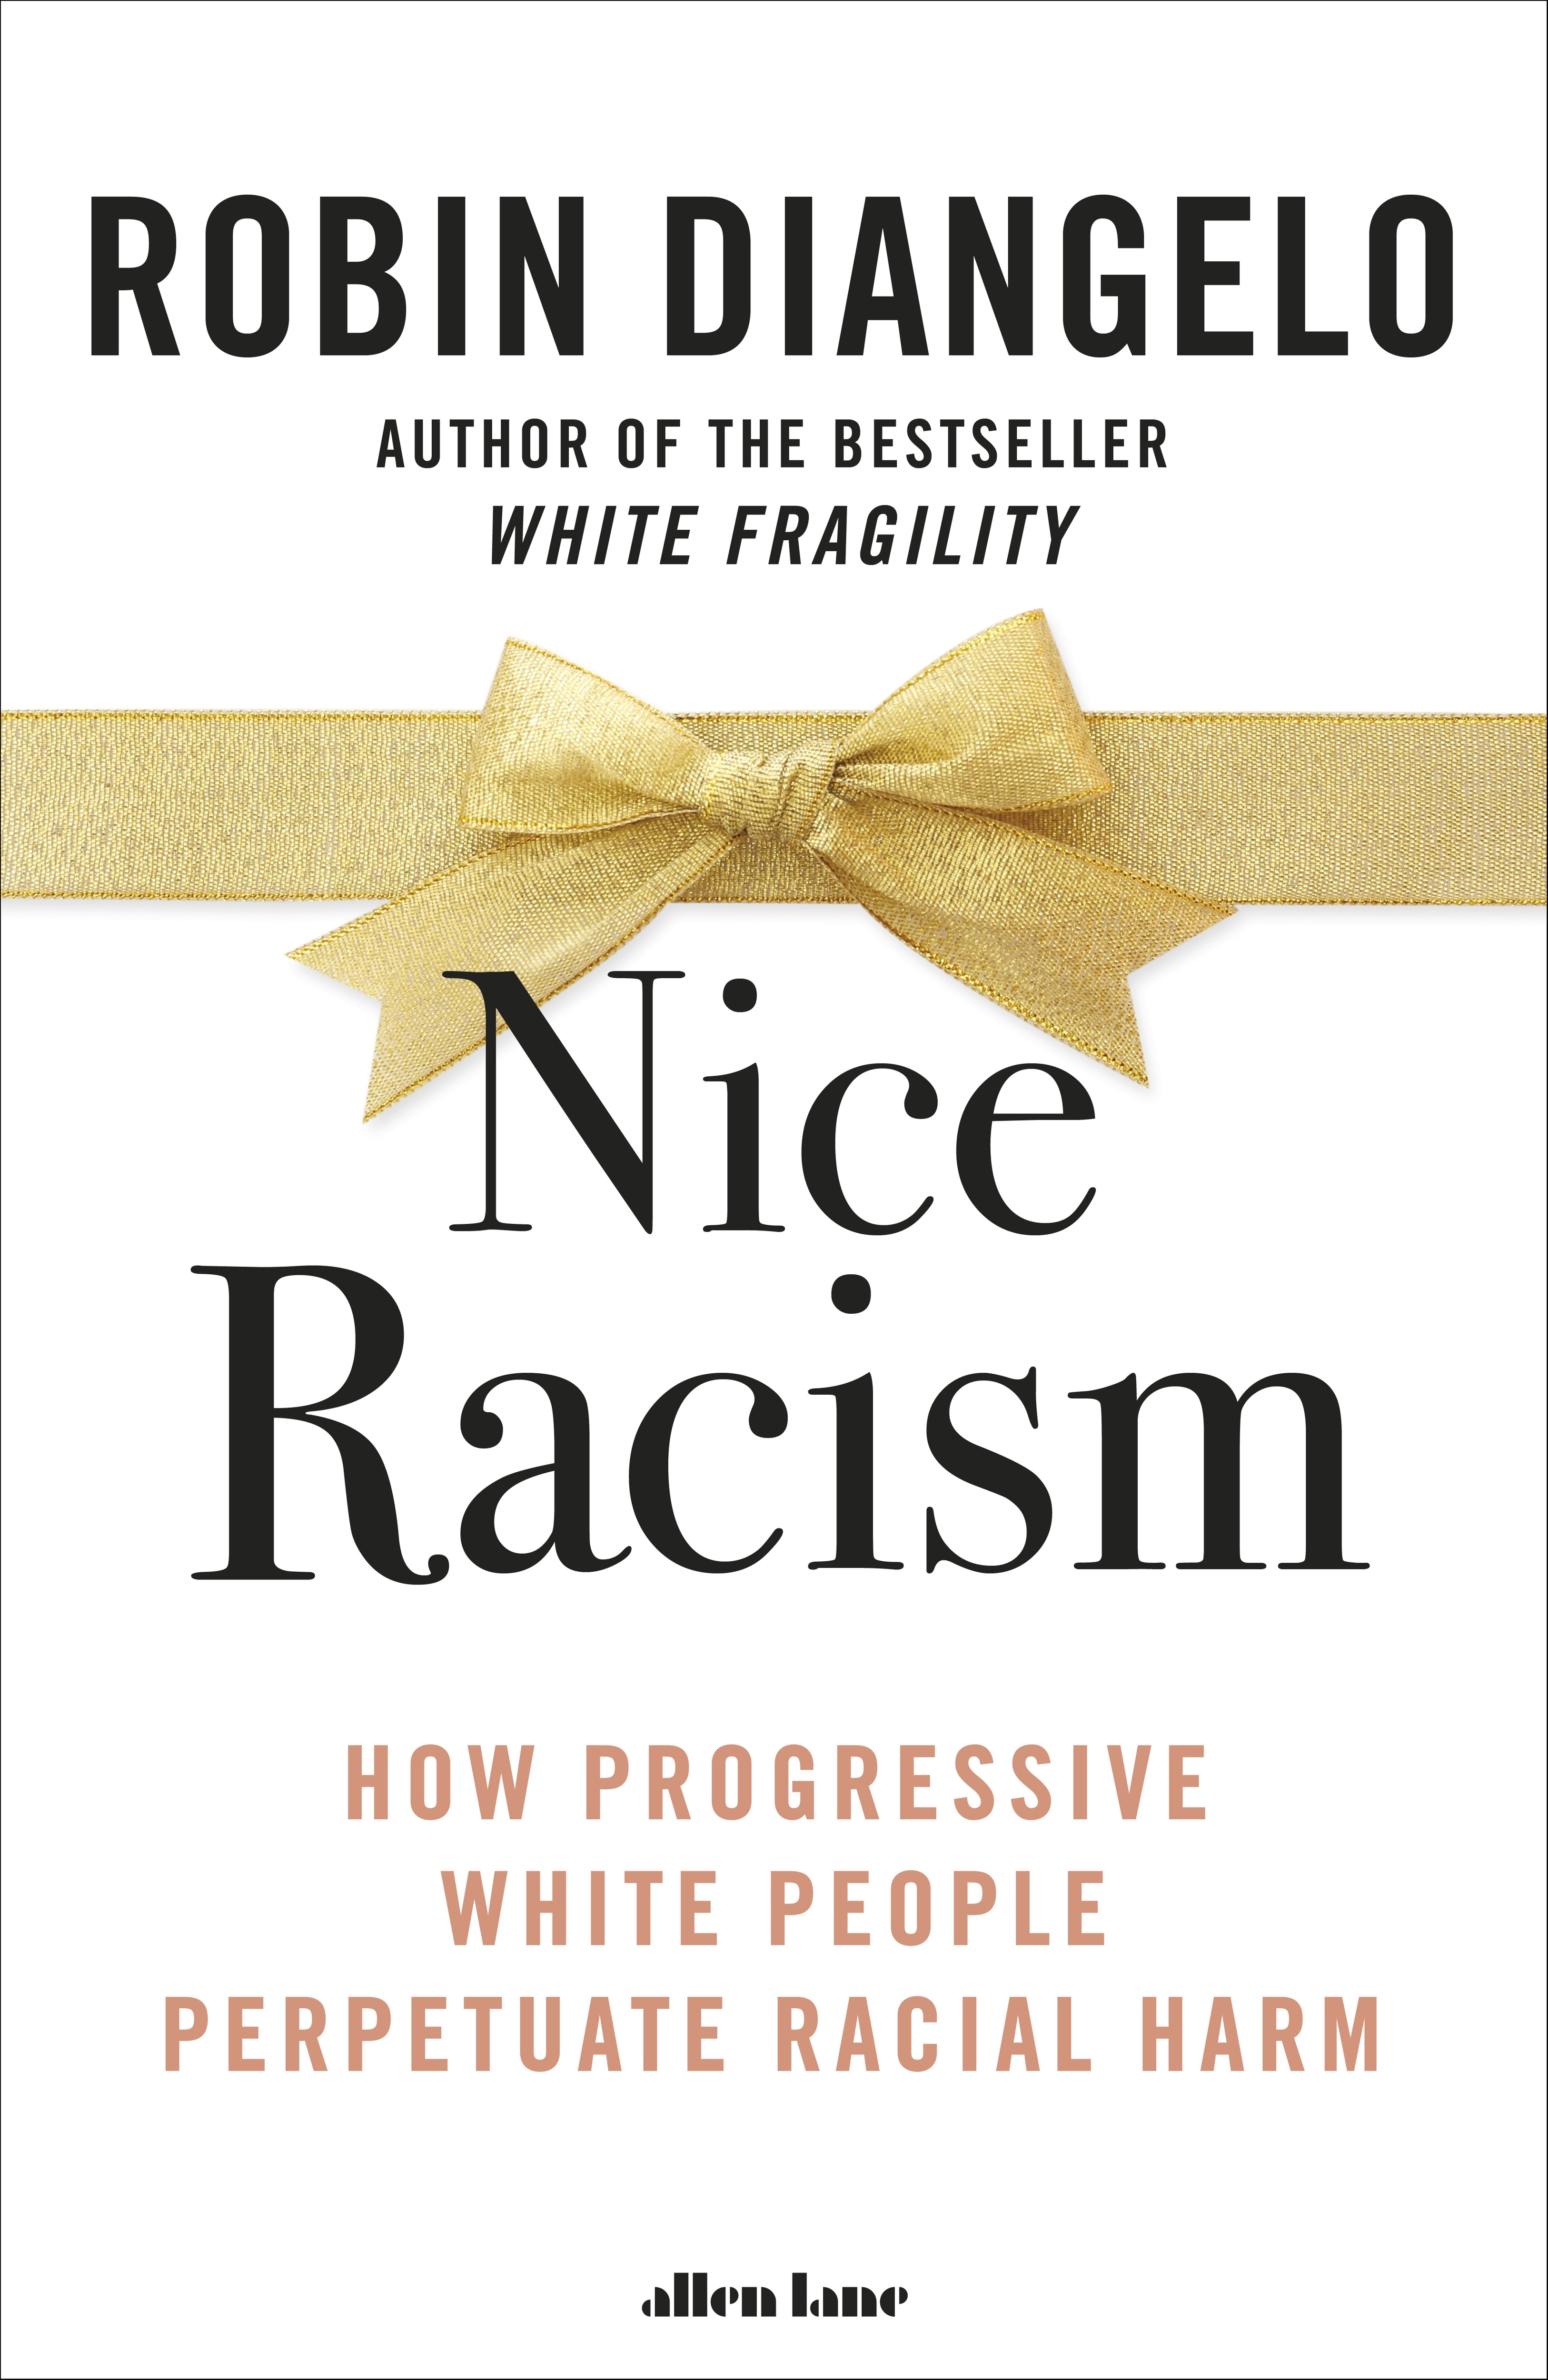 Book “Nice Racism” by Robin DiAngelo — June 29, 2021